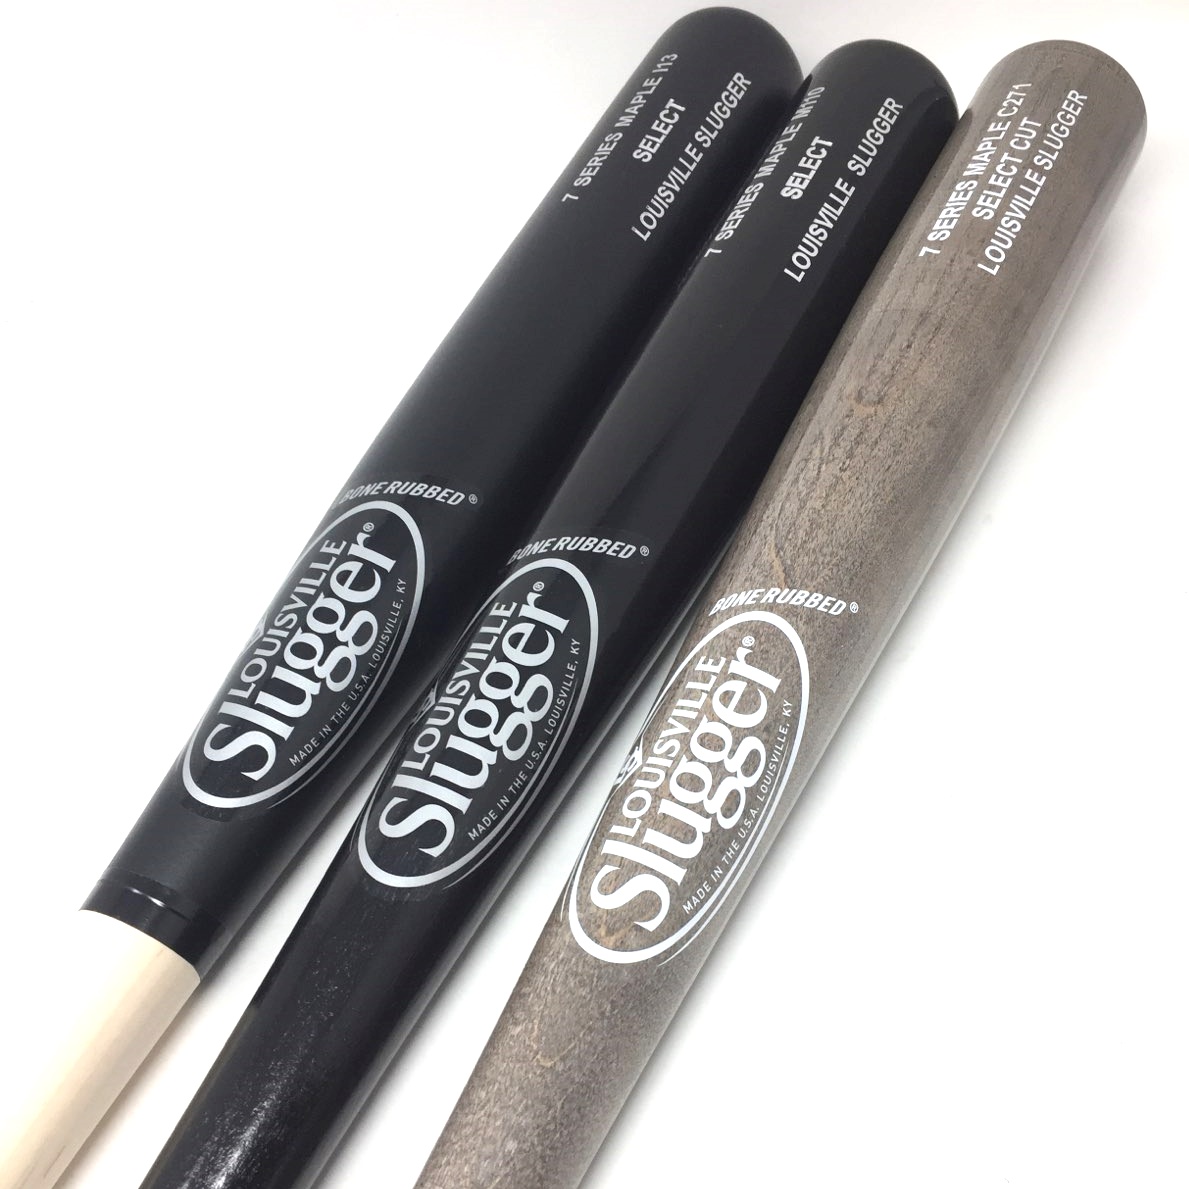 louisville-slugger-wood-baseball-bat-pack-33-inch-3-bats-series-7-maple BATPACK-0011 Louisville Does not apply <p>33 Inch Series 7 Maple Wood Baseball Bats from Louisville Slugger.